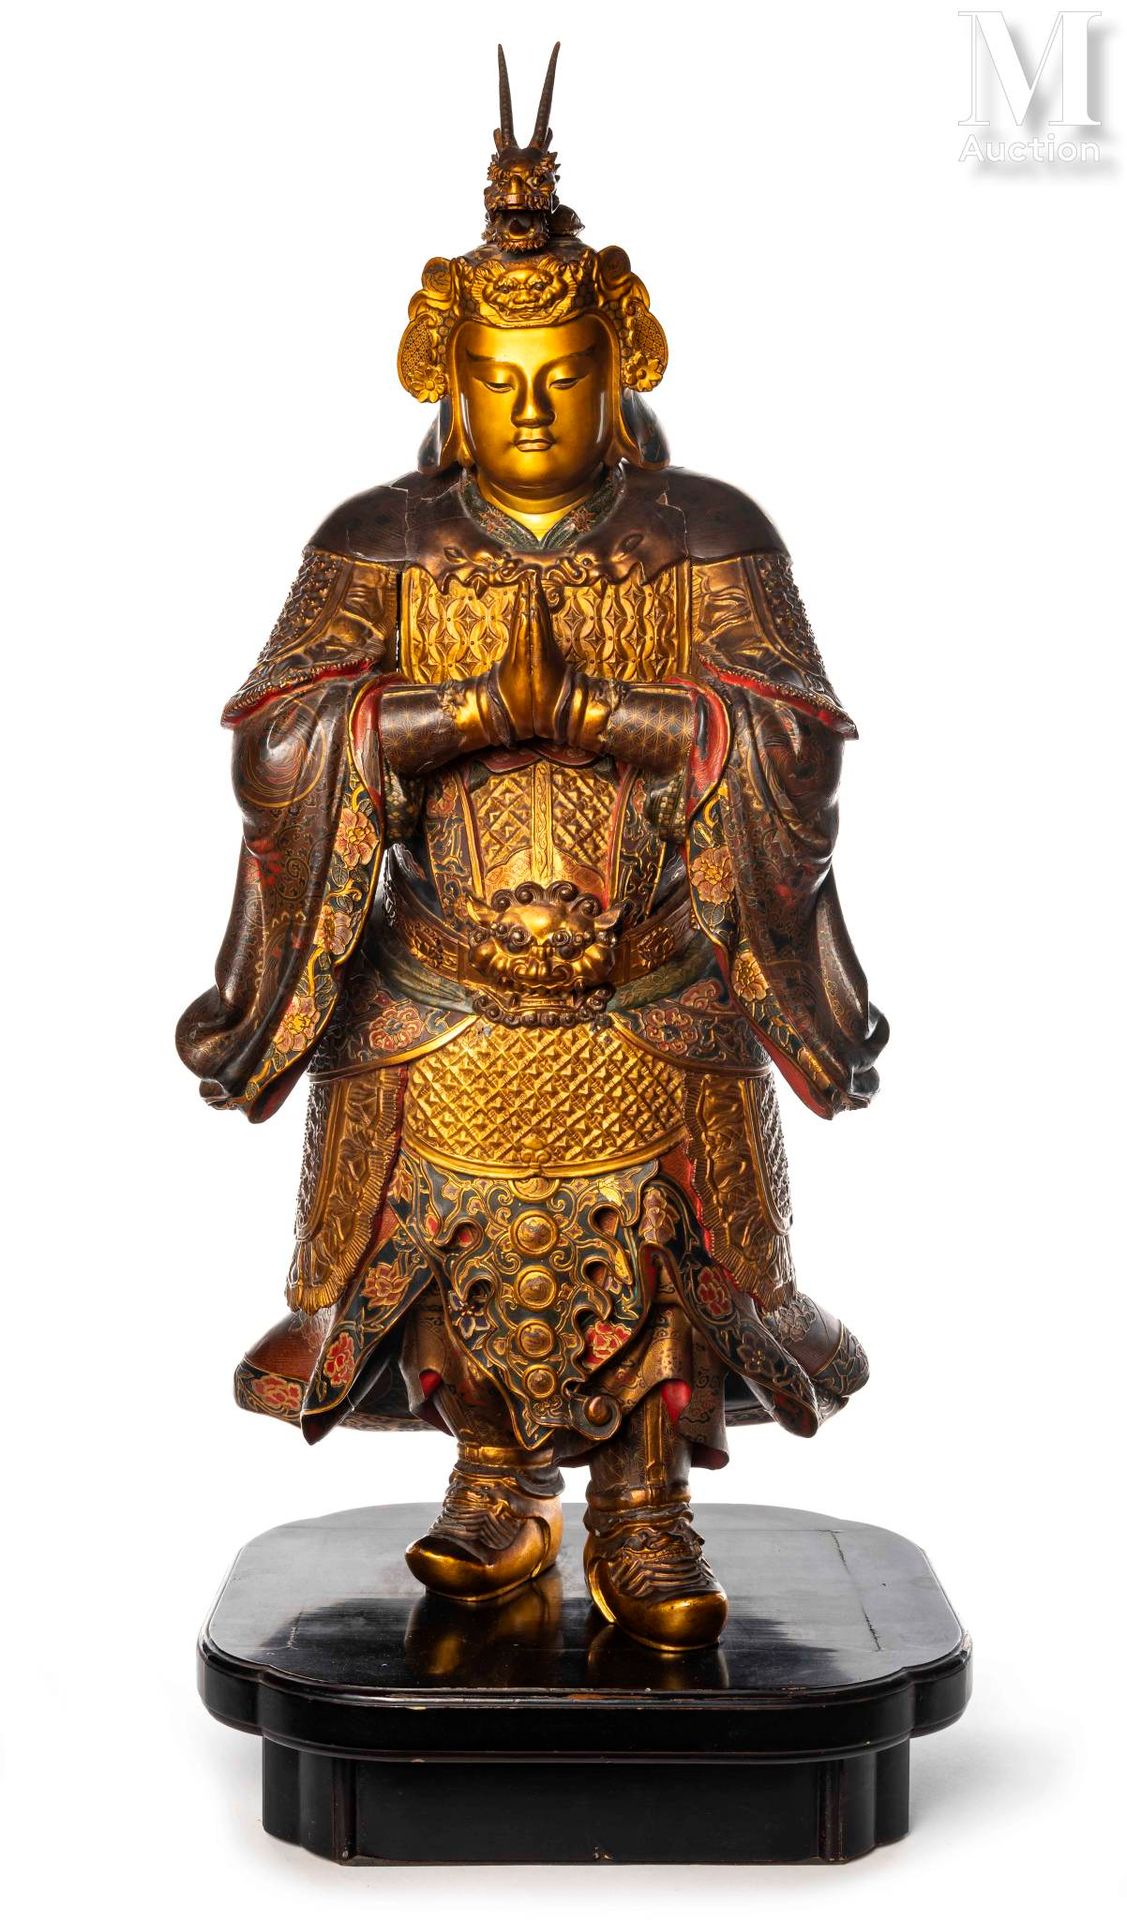 JAPON, XIXe siècle 漆器和镀金木雕

描绘的是伊达天神，他双手合十站在胸前祈祷（"gasshô-in"）。他身穿做工精细的盔甲，胸甲上装饰着一&hellip;